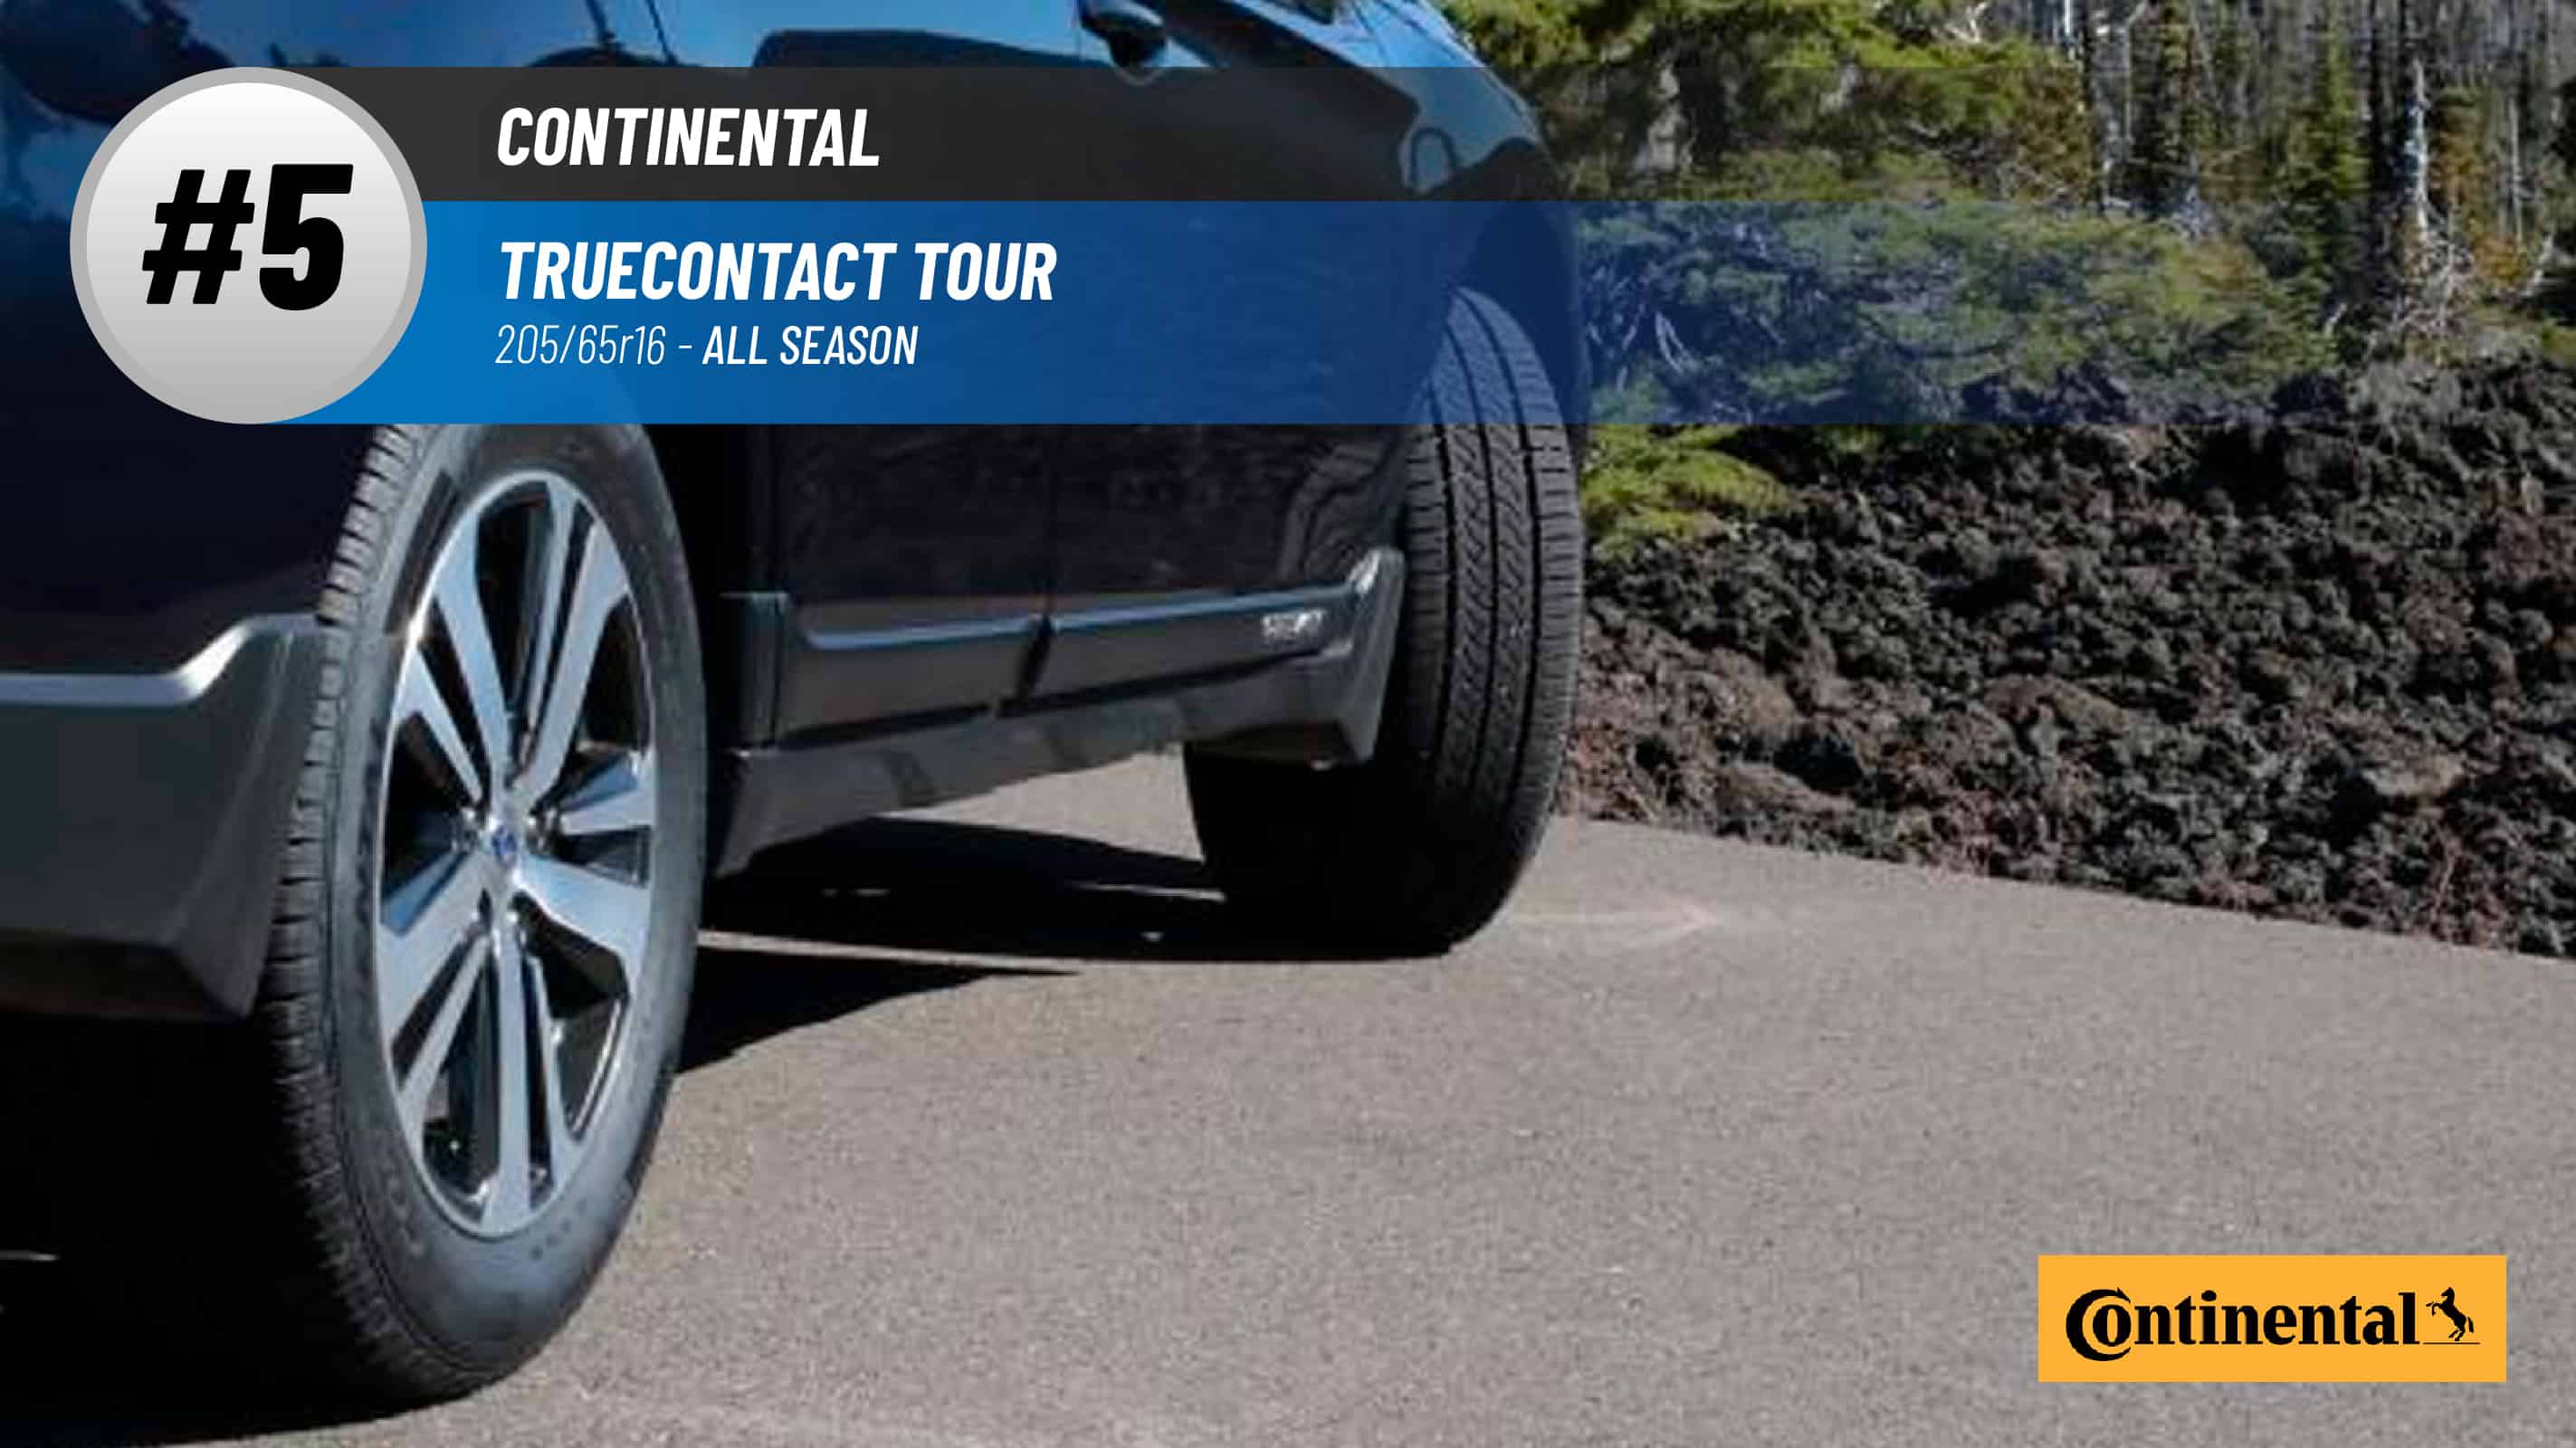 Top #5 All Season Tires: Continental TrueContact Tour – best 205/65 R16